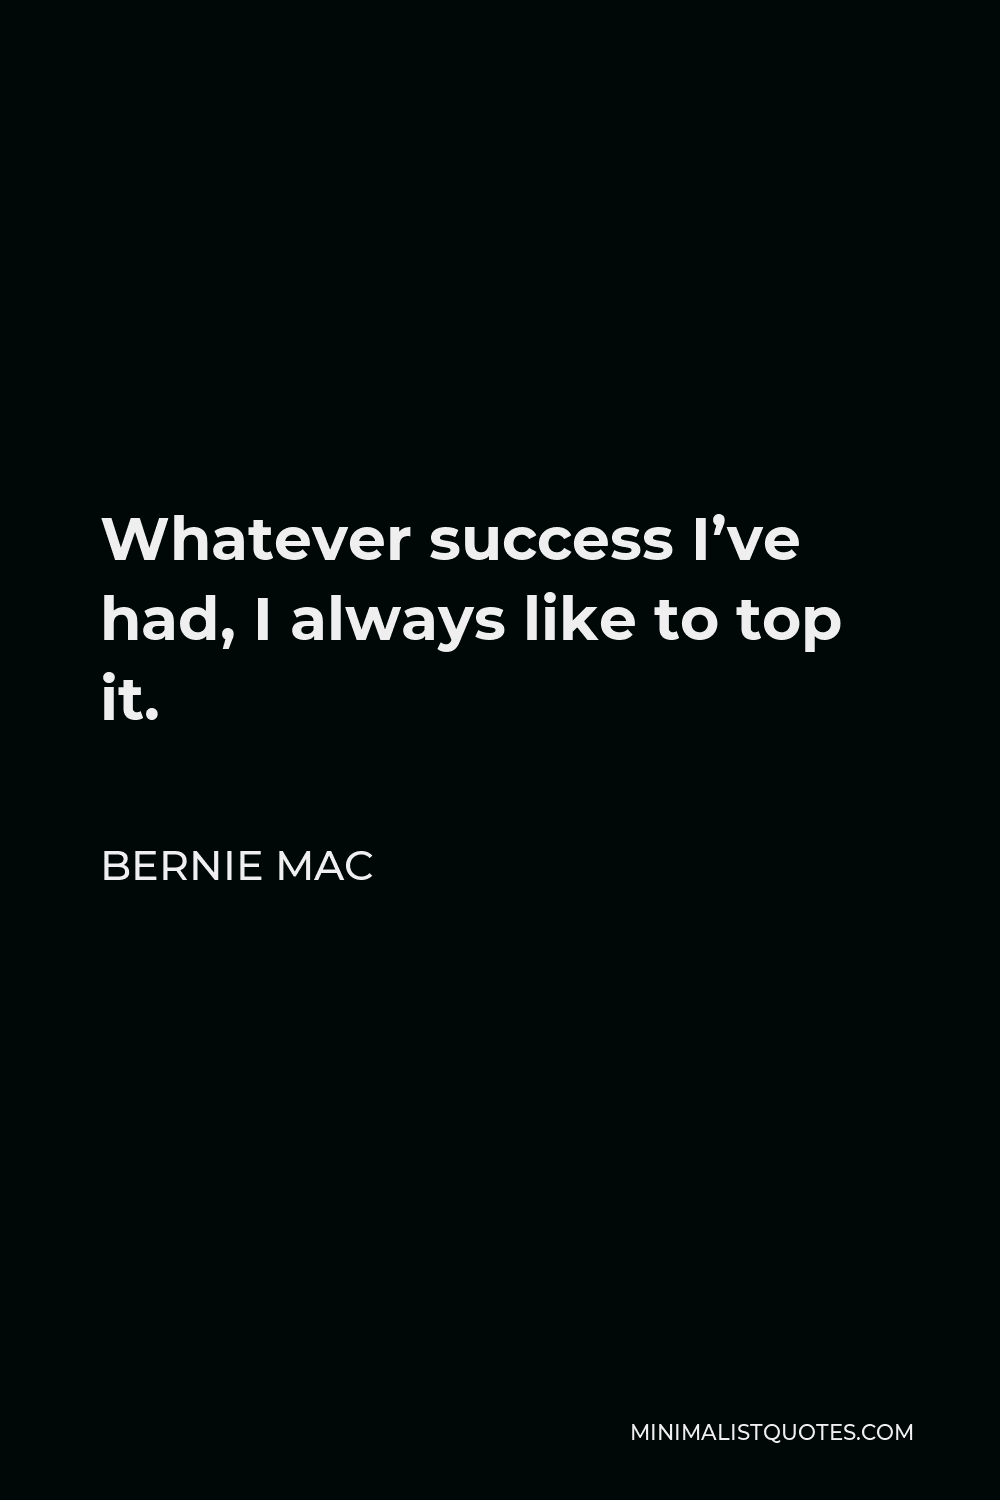 Bernie Mac Quote - Whatever success I’ve had, I always like to top it.